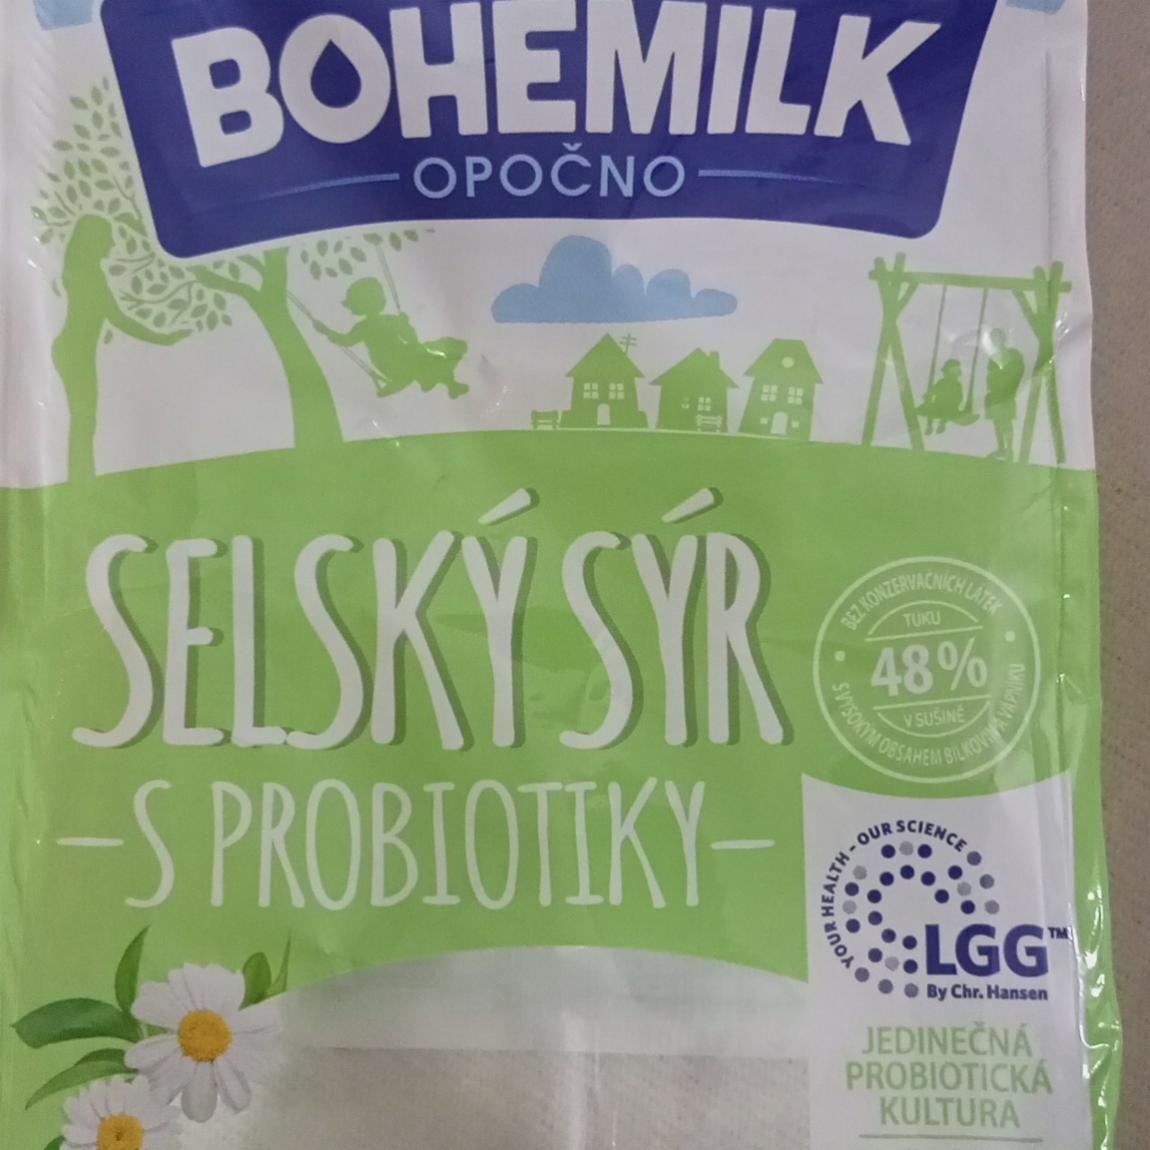 Fotografie - Selský sýr s probiotiky Bohemilk